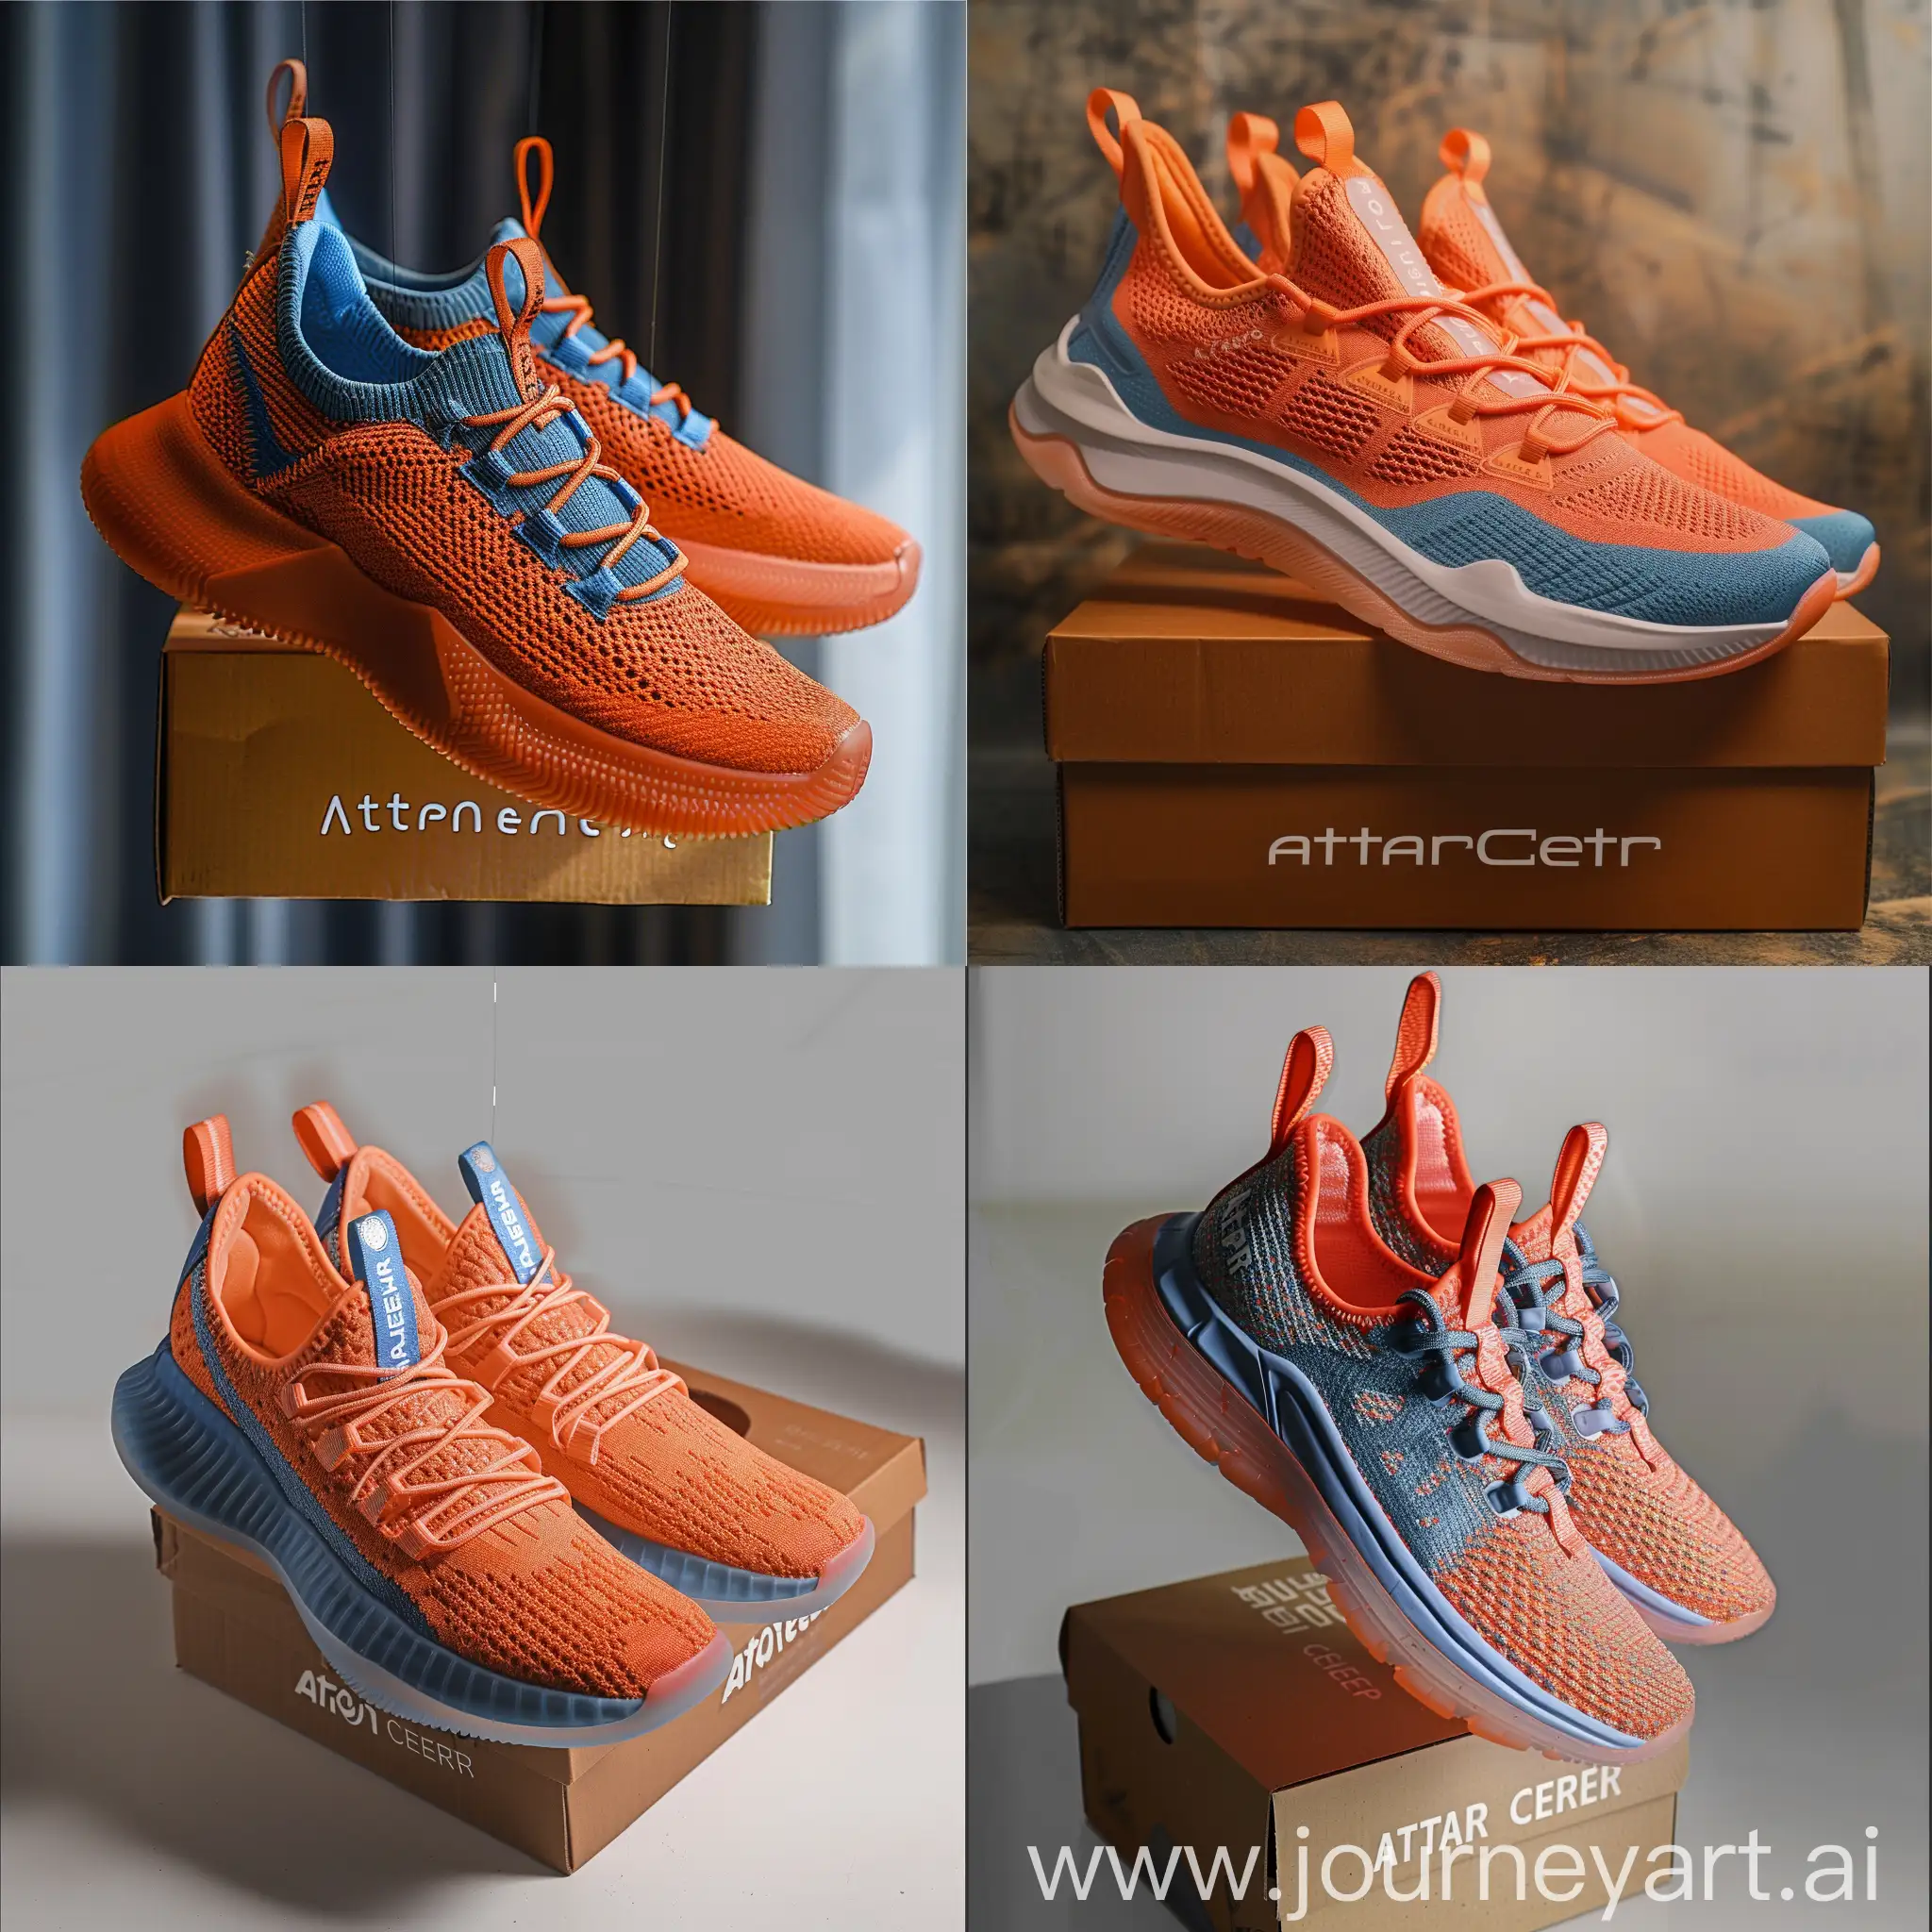 Attar-Center-OrangeBlue-Sports-Shoes-Suspended-in-Air